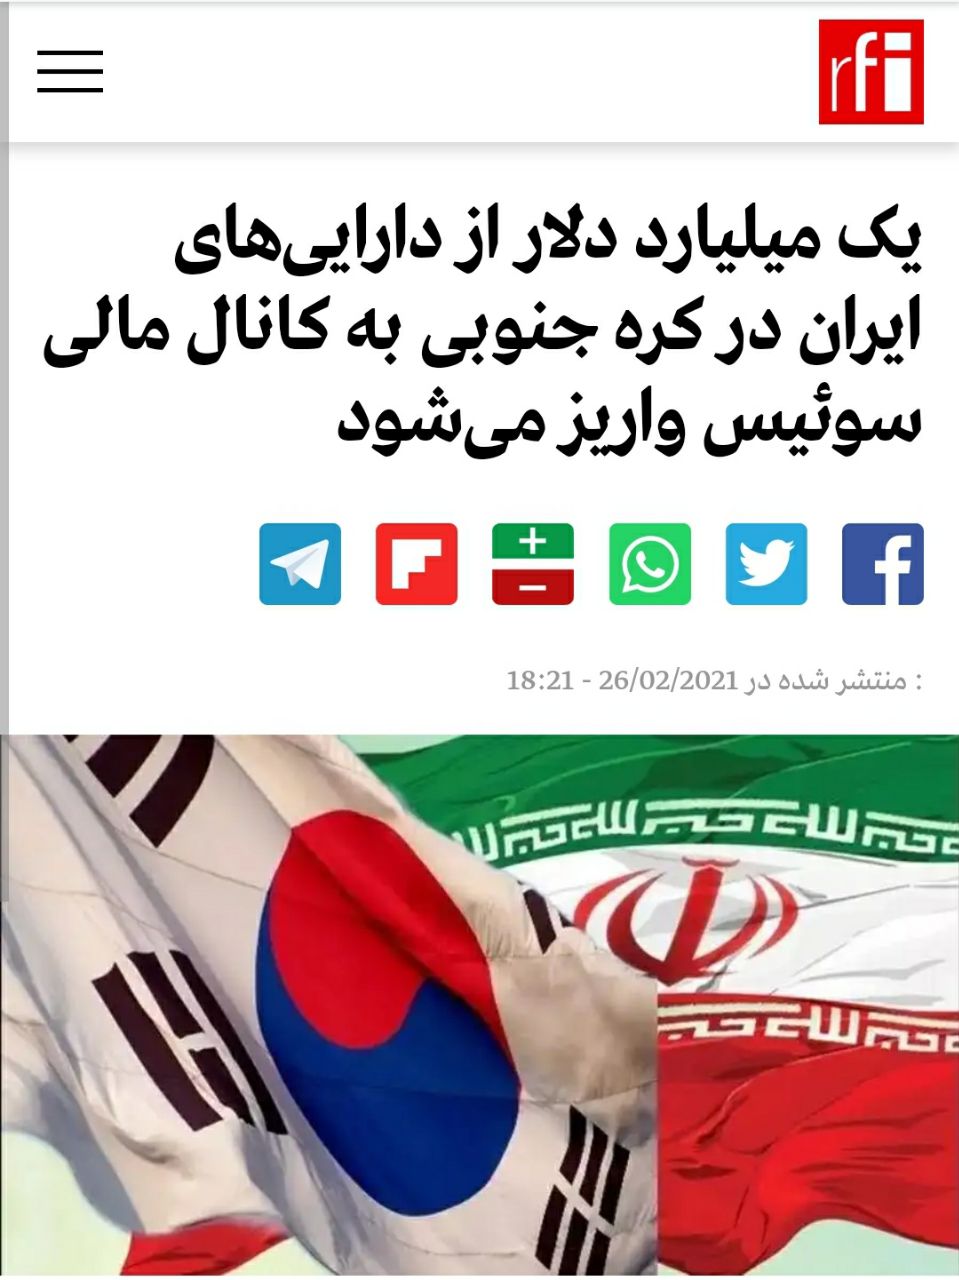 ️یک میلیارد دلار از دارایی‌های ایران در کره جنوبی به کانال مالی سوئیس واریز می‌شود